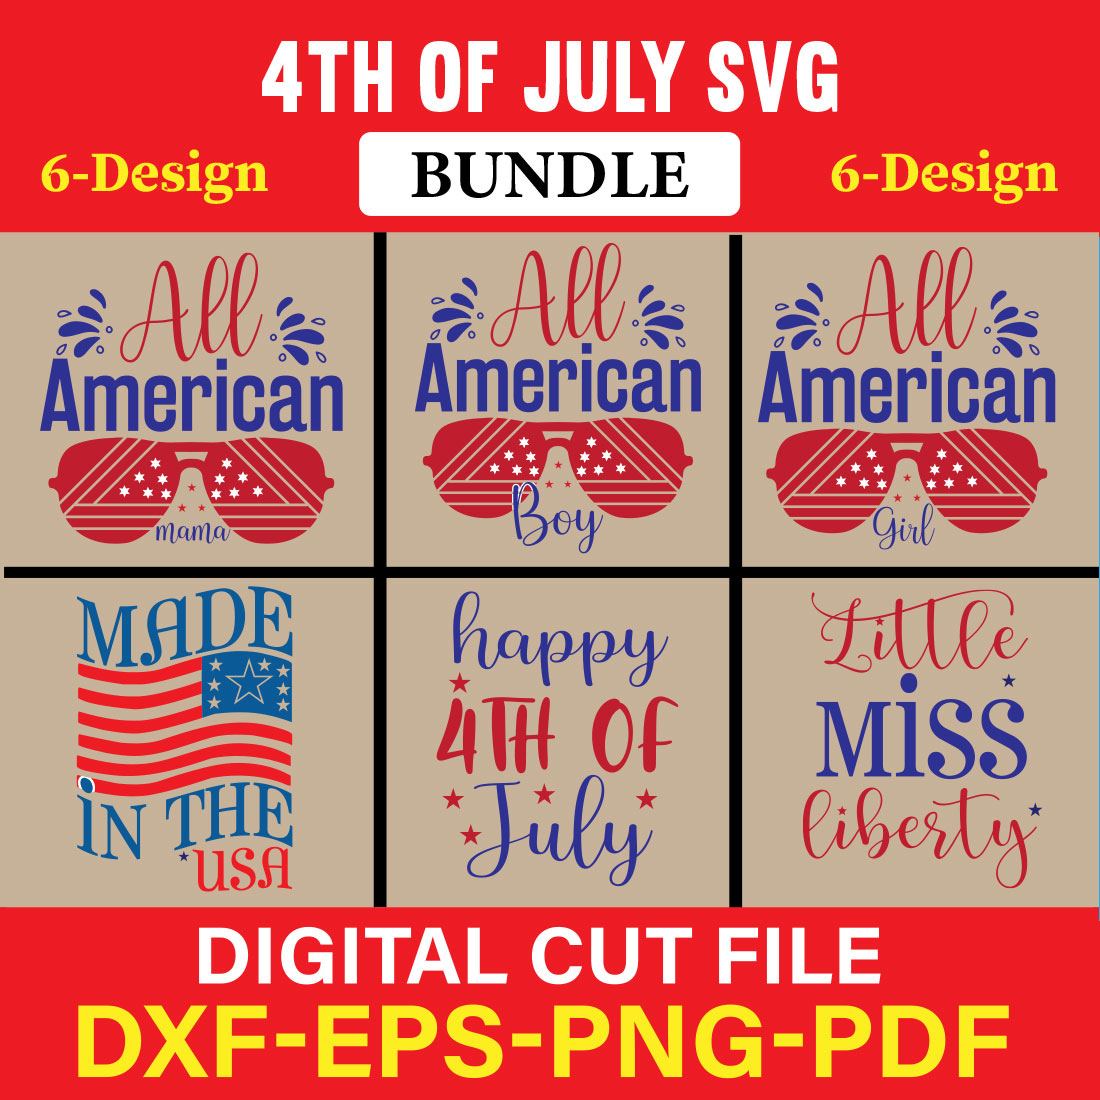 4th of July SVG Bundle, July 4th SVG, Fourth of July SVG Vol-04 cover image.